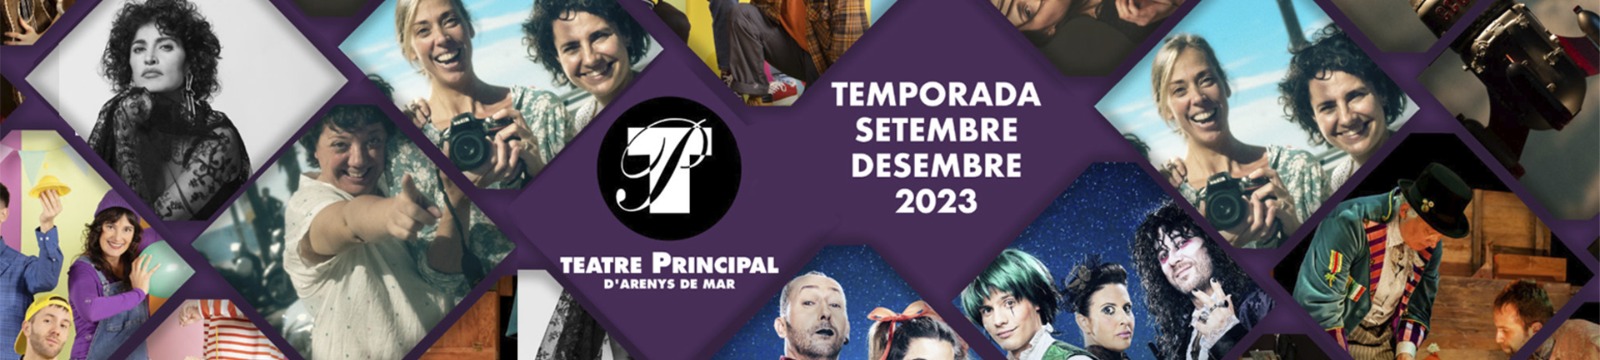 TEMPORADA TEATRE PRINCIPAL SETEMBRE-DESEMBRE 2023